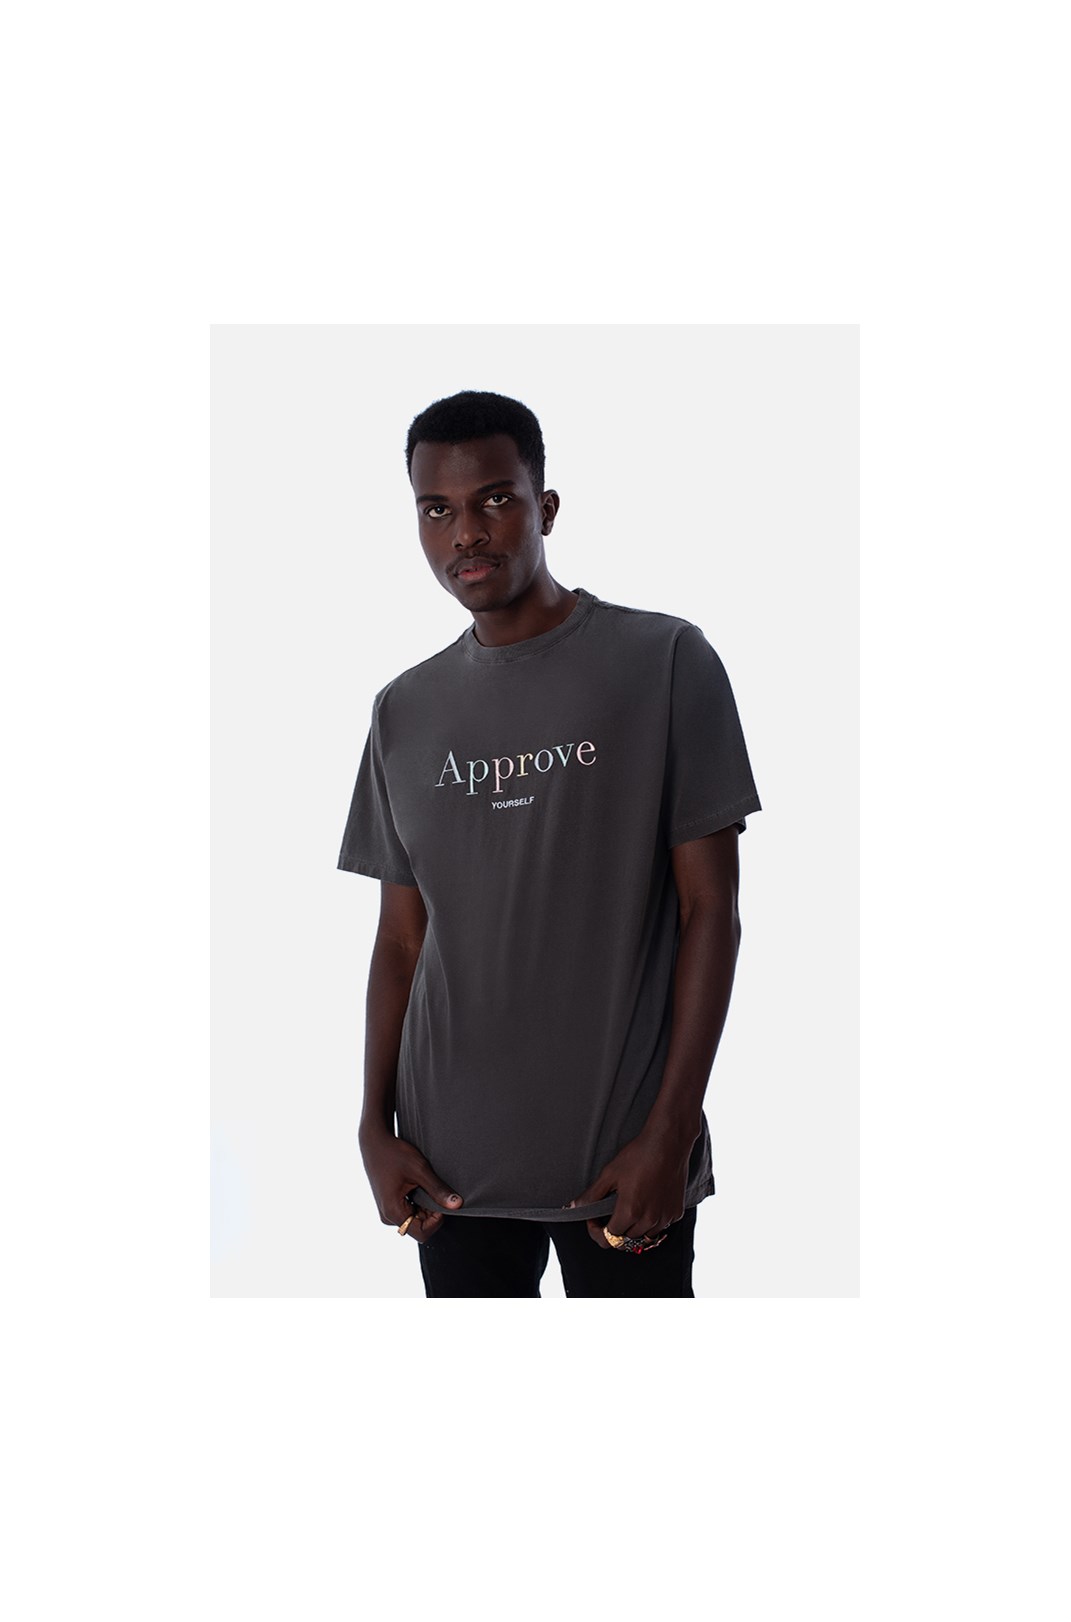 Camiseta Regular Approve Mirage Cinza Color